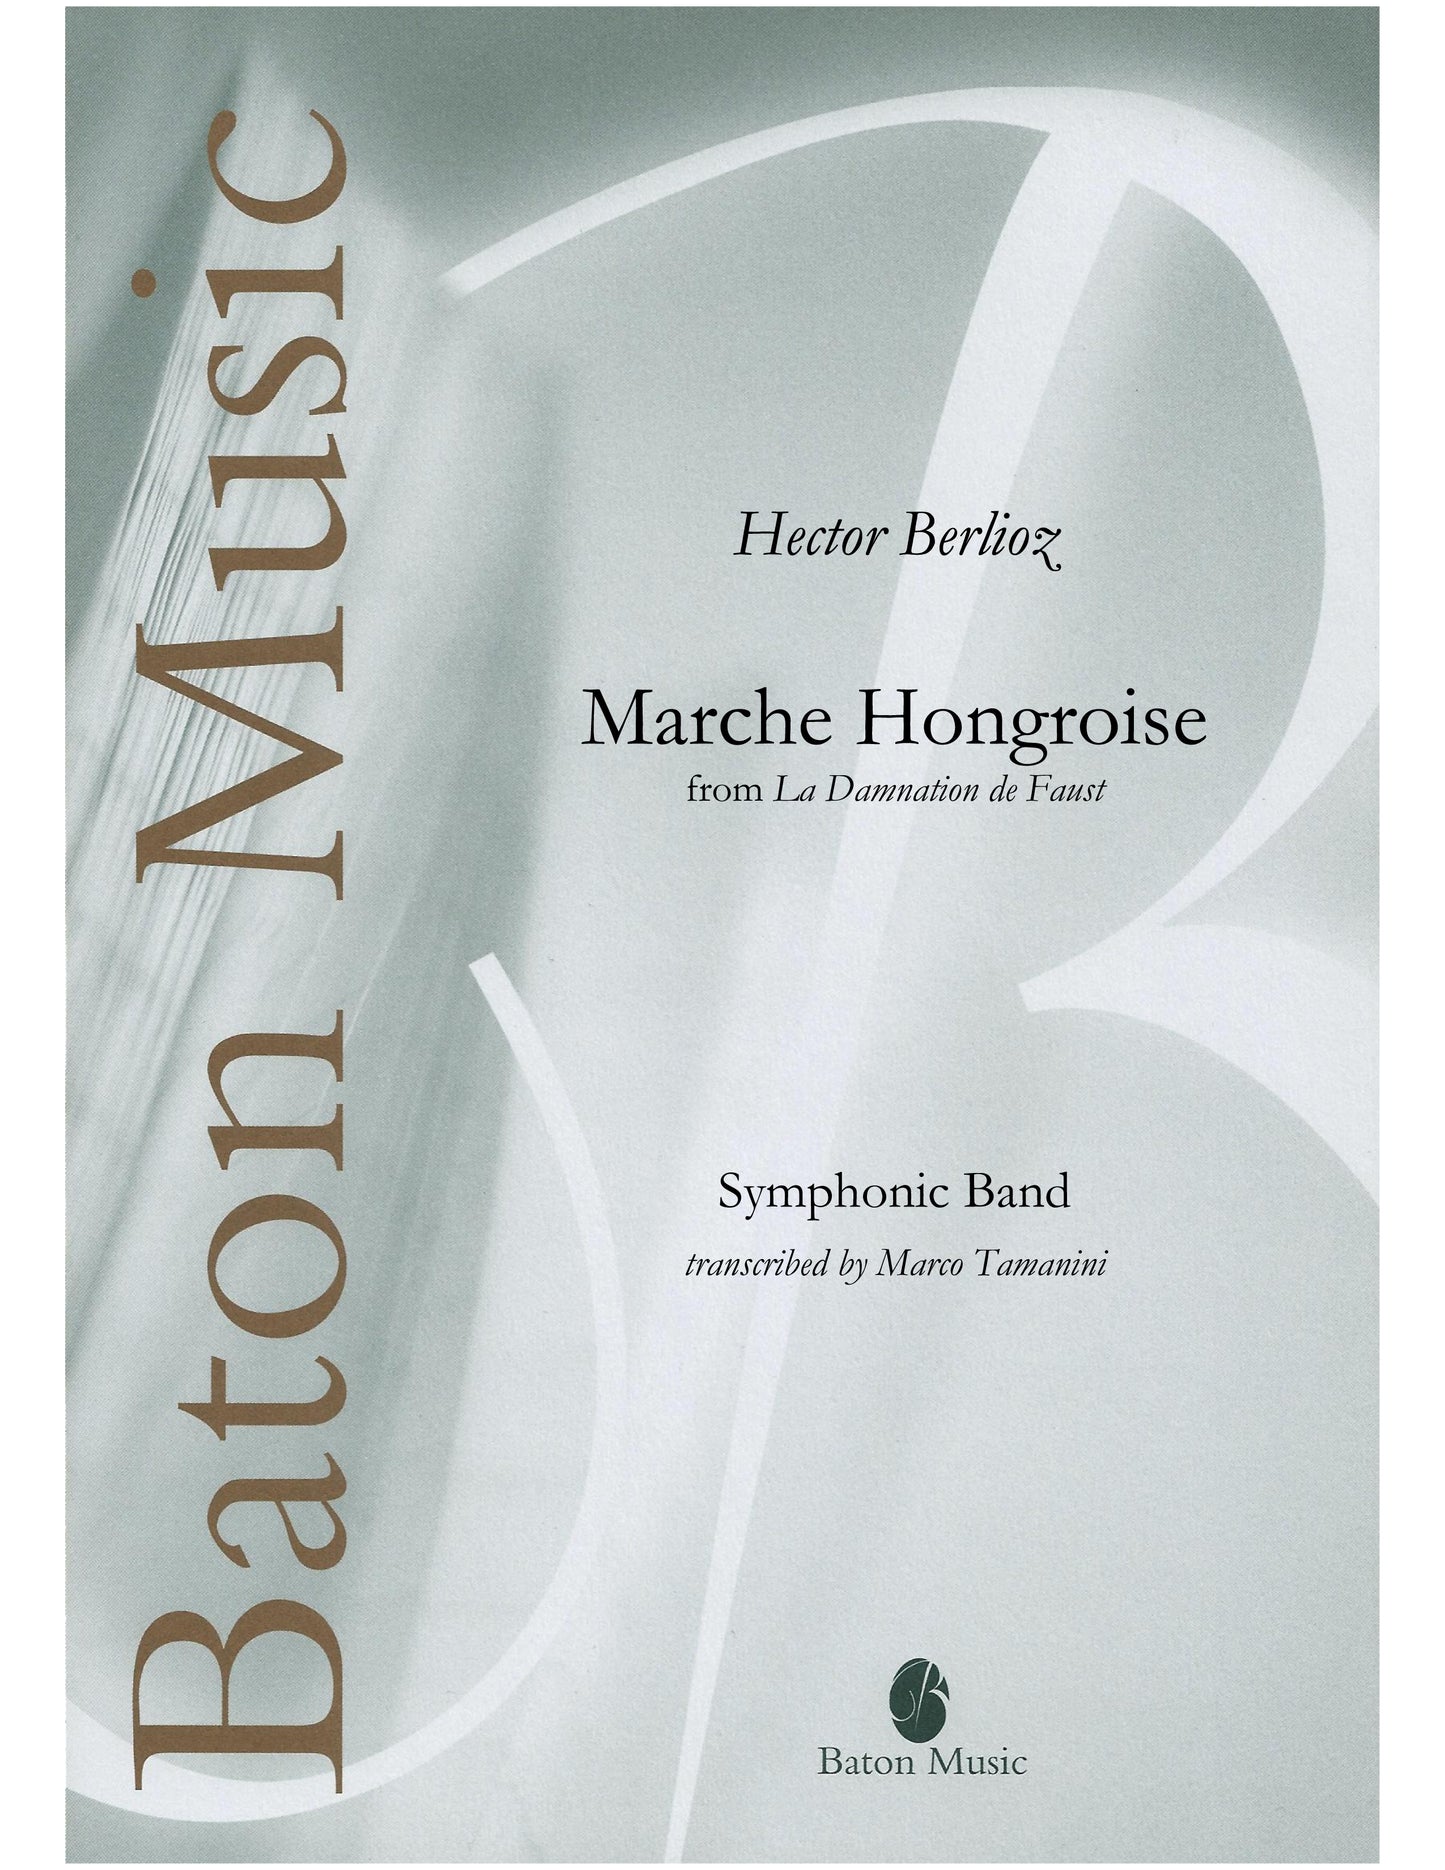 Marche Hongroise - Hector Berlioz